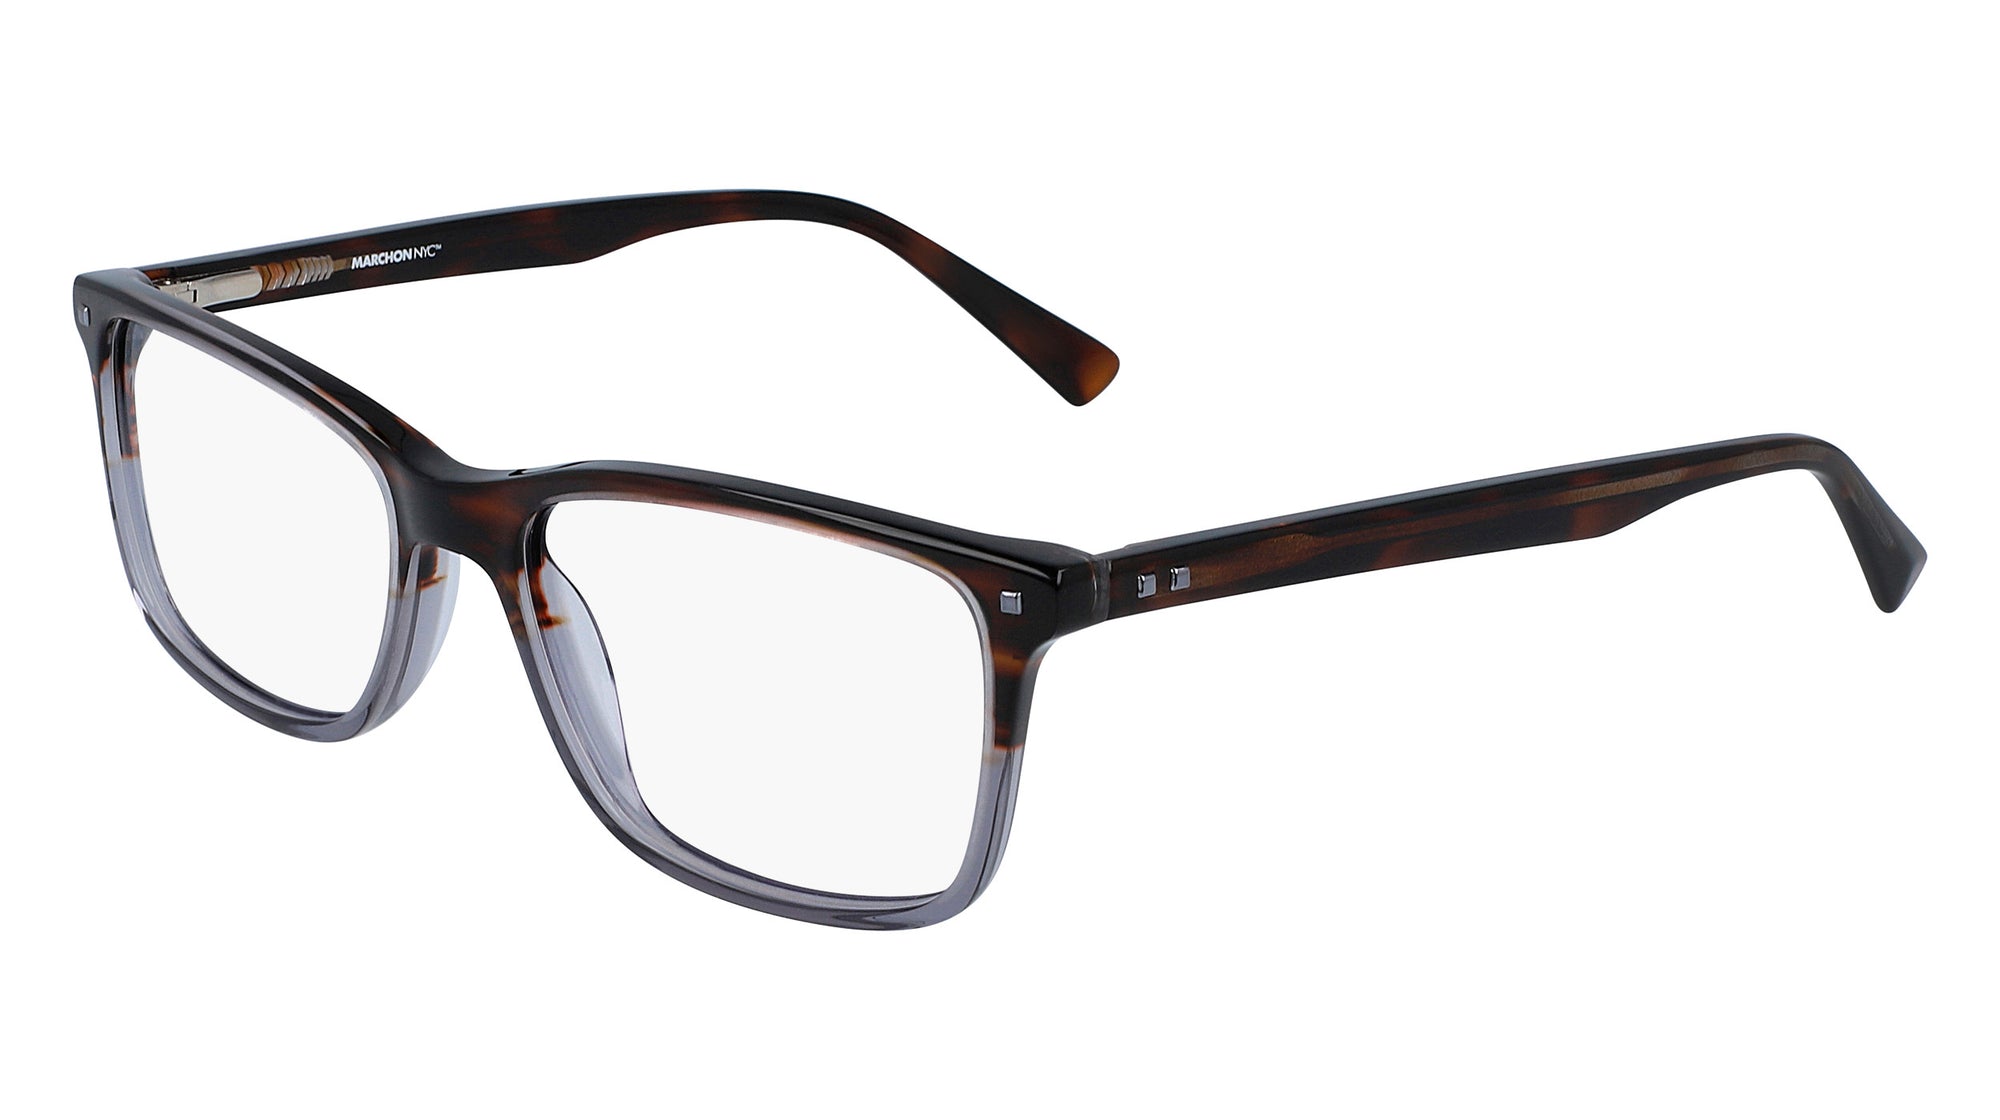 Marchon Eyeglasses M-8501